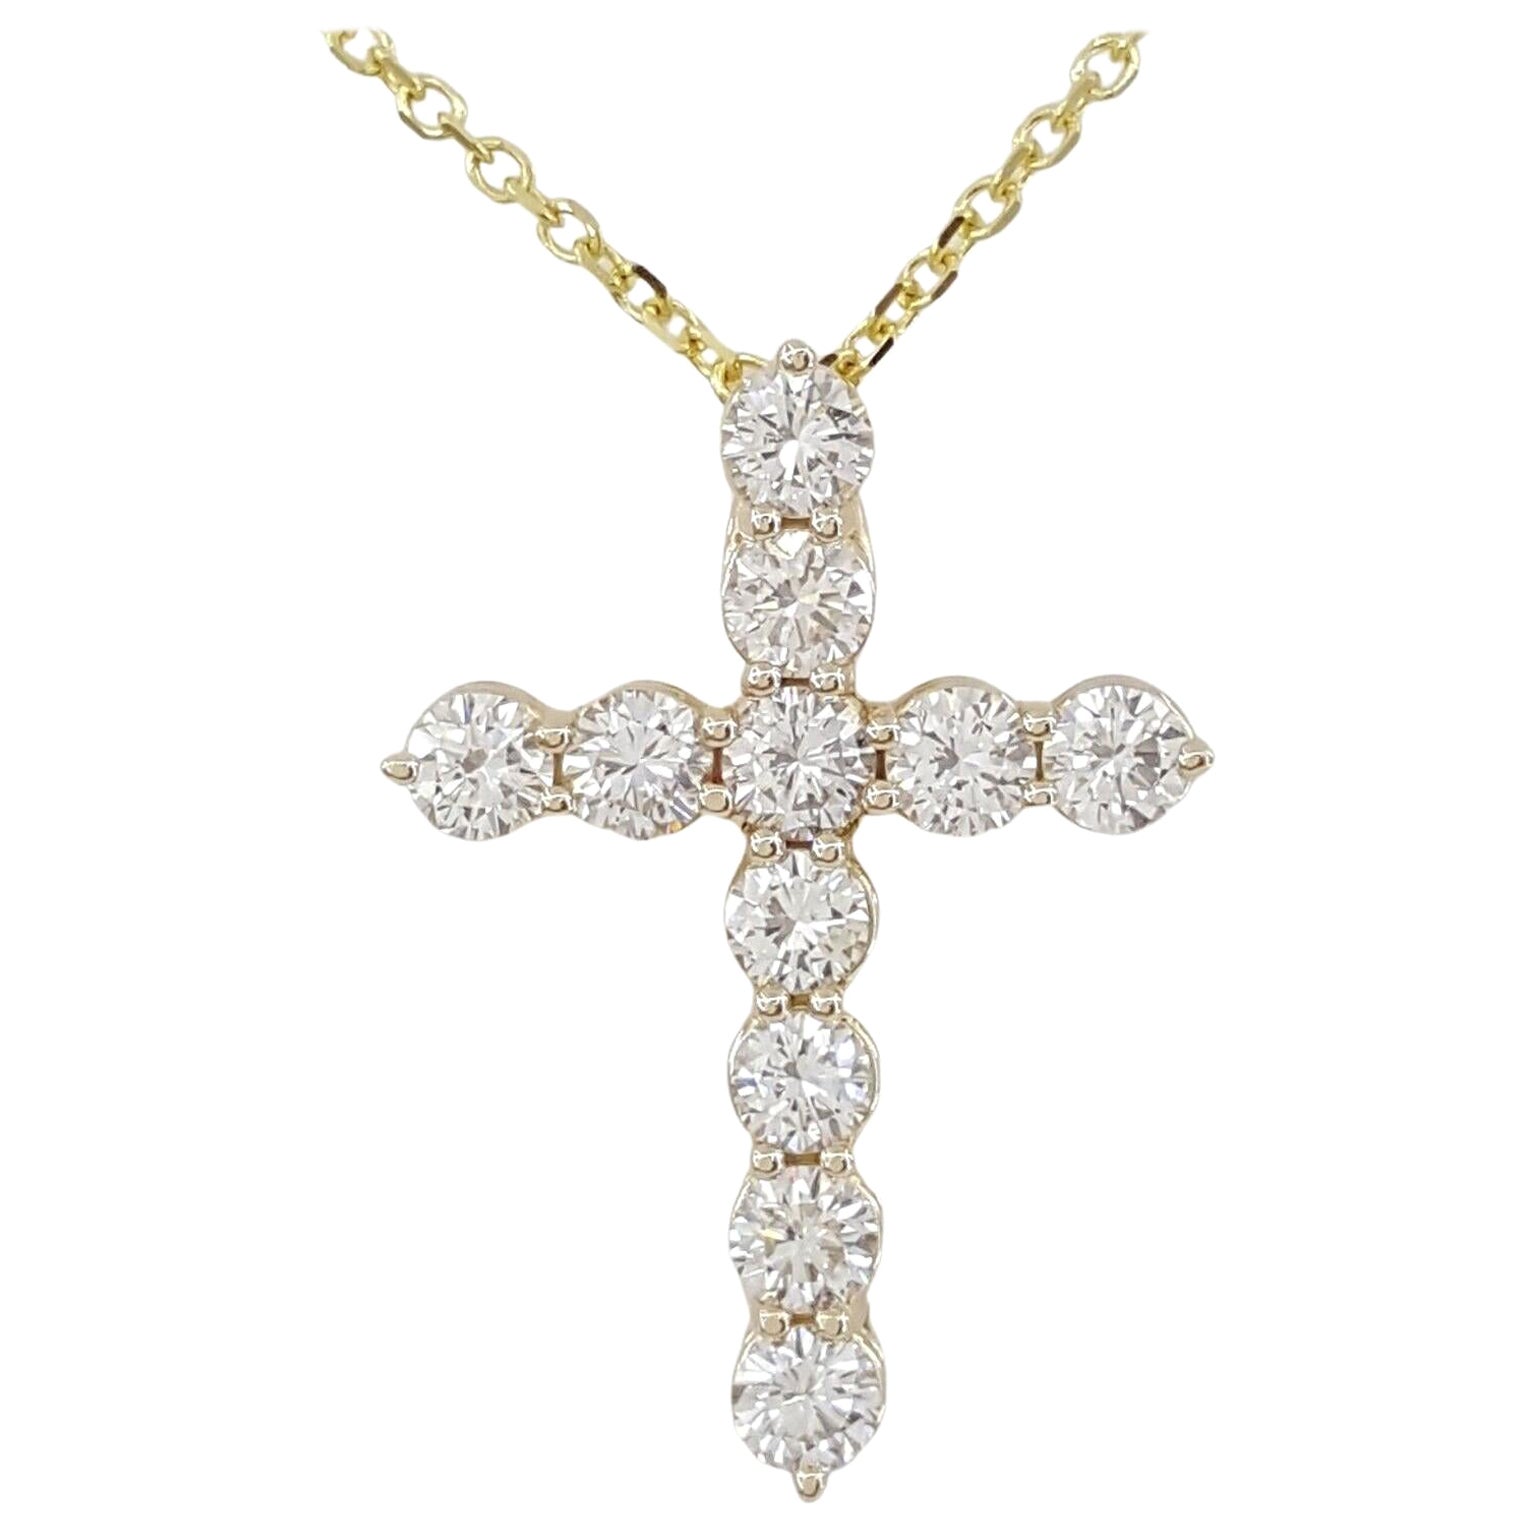 2 Carat Round Cut Diamond Teardrop Pendant / Necklace in 18K White Gold For Sale